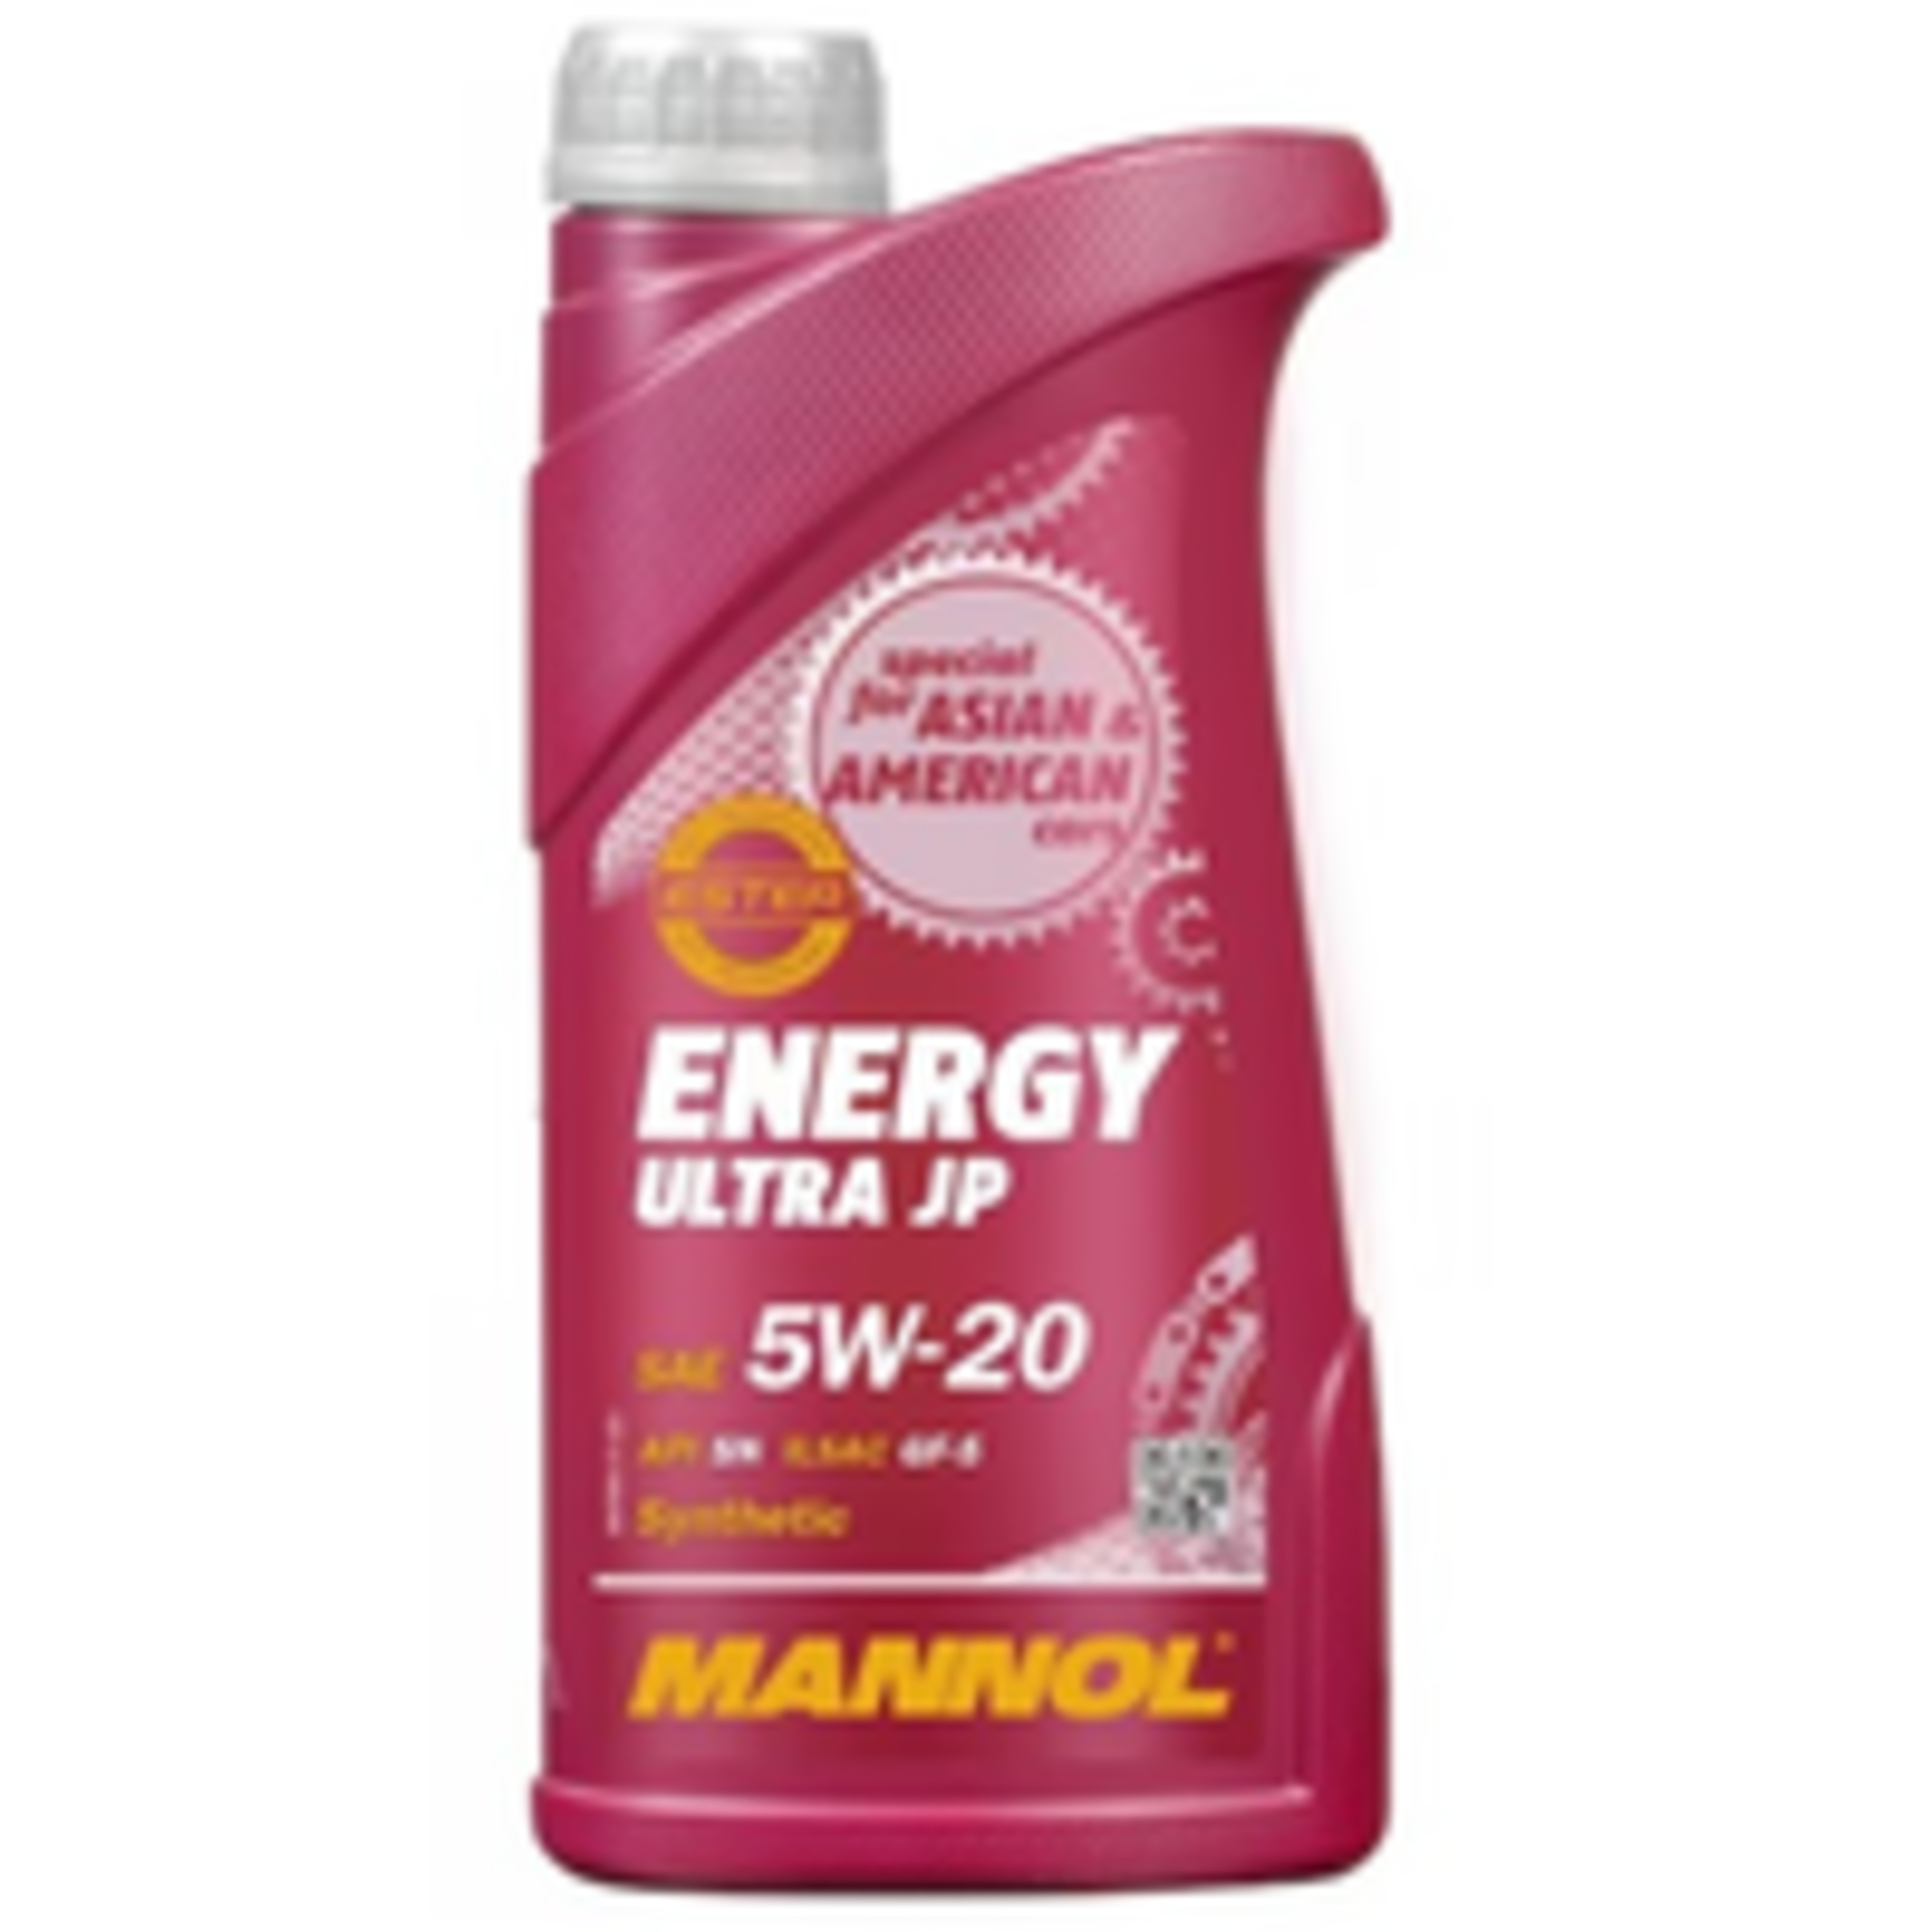 Mannol energy ultra jp 5w-20. 1l